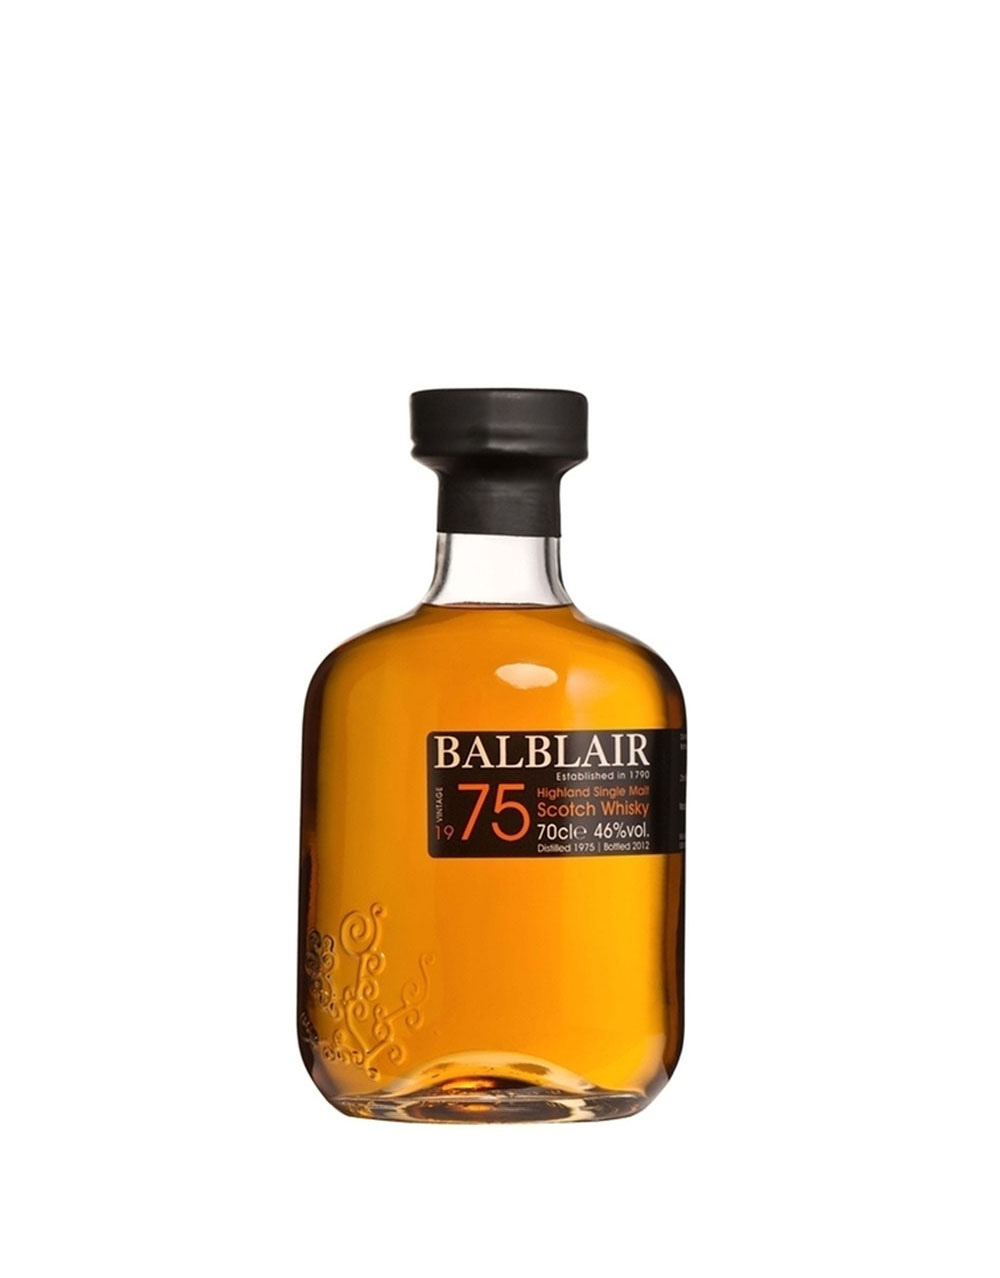 Balblair 1975 Highland Single Malt Scotch Whisky